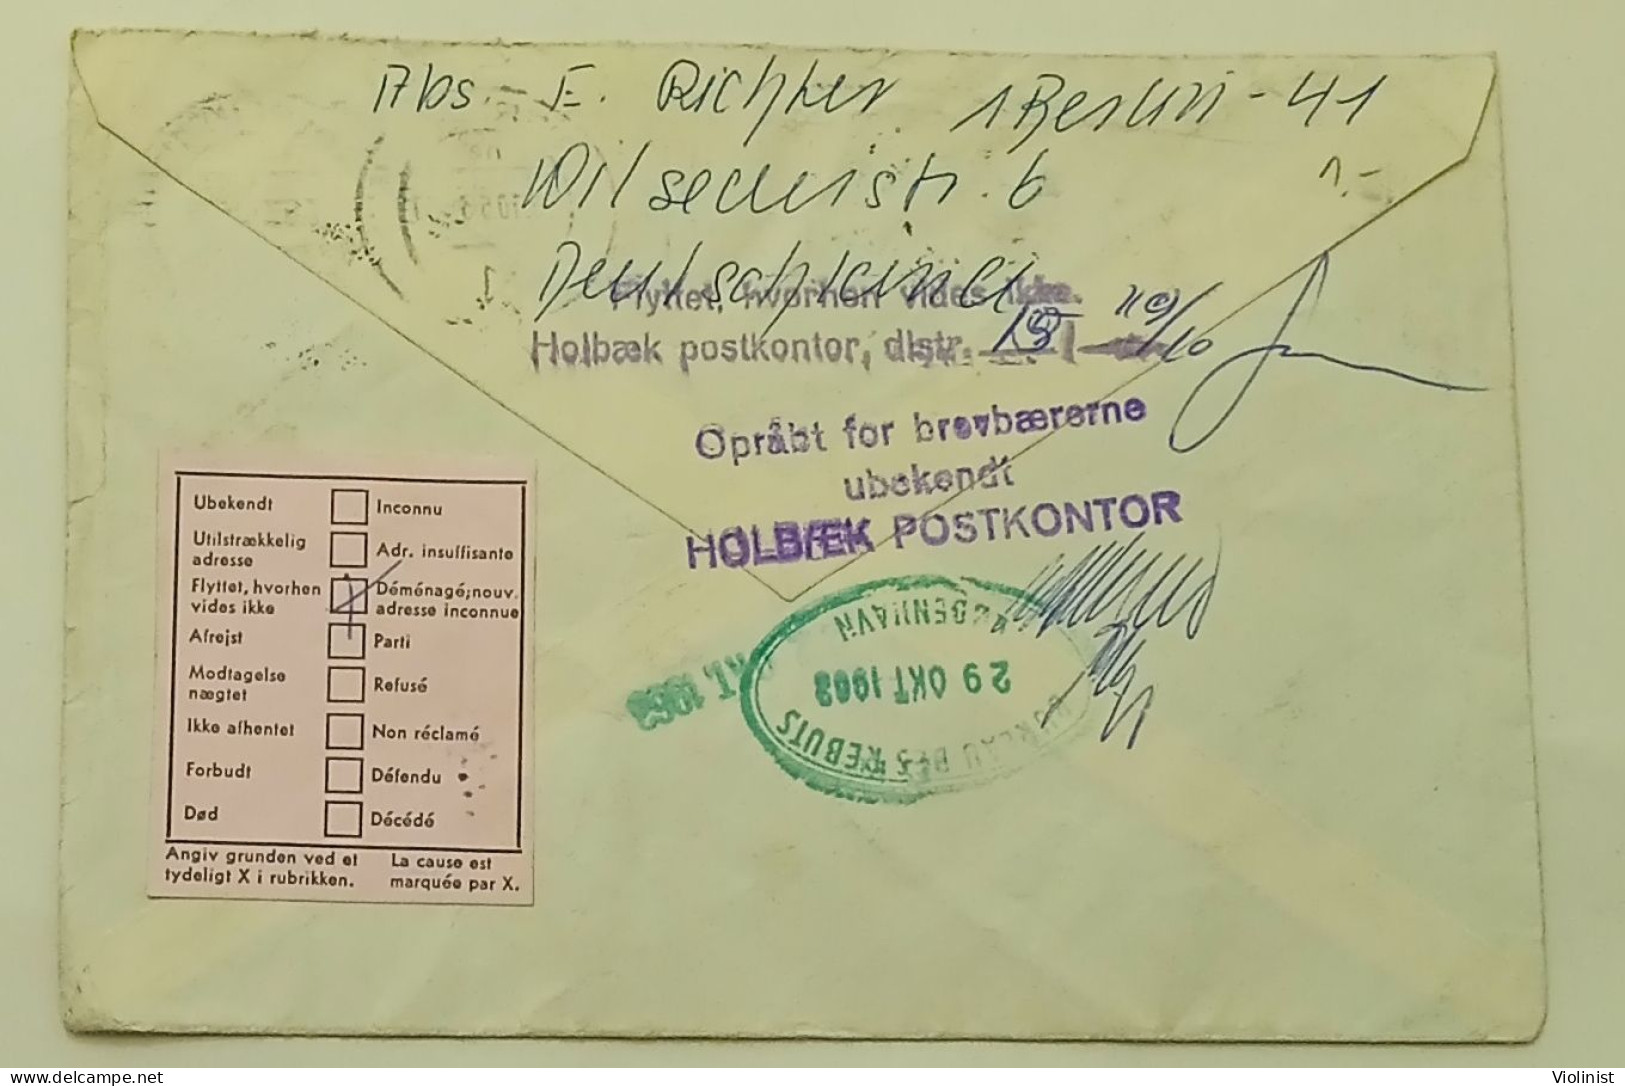 Deutsche Bundespost Berlin-sent to Holbæk,Denmark-damaged-returned 1963.